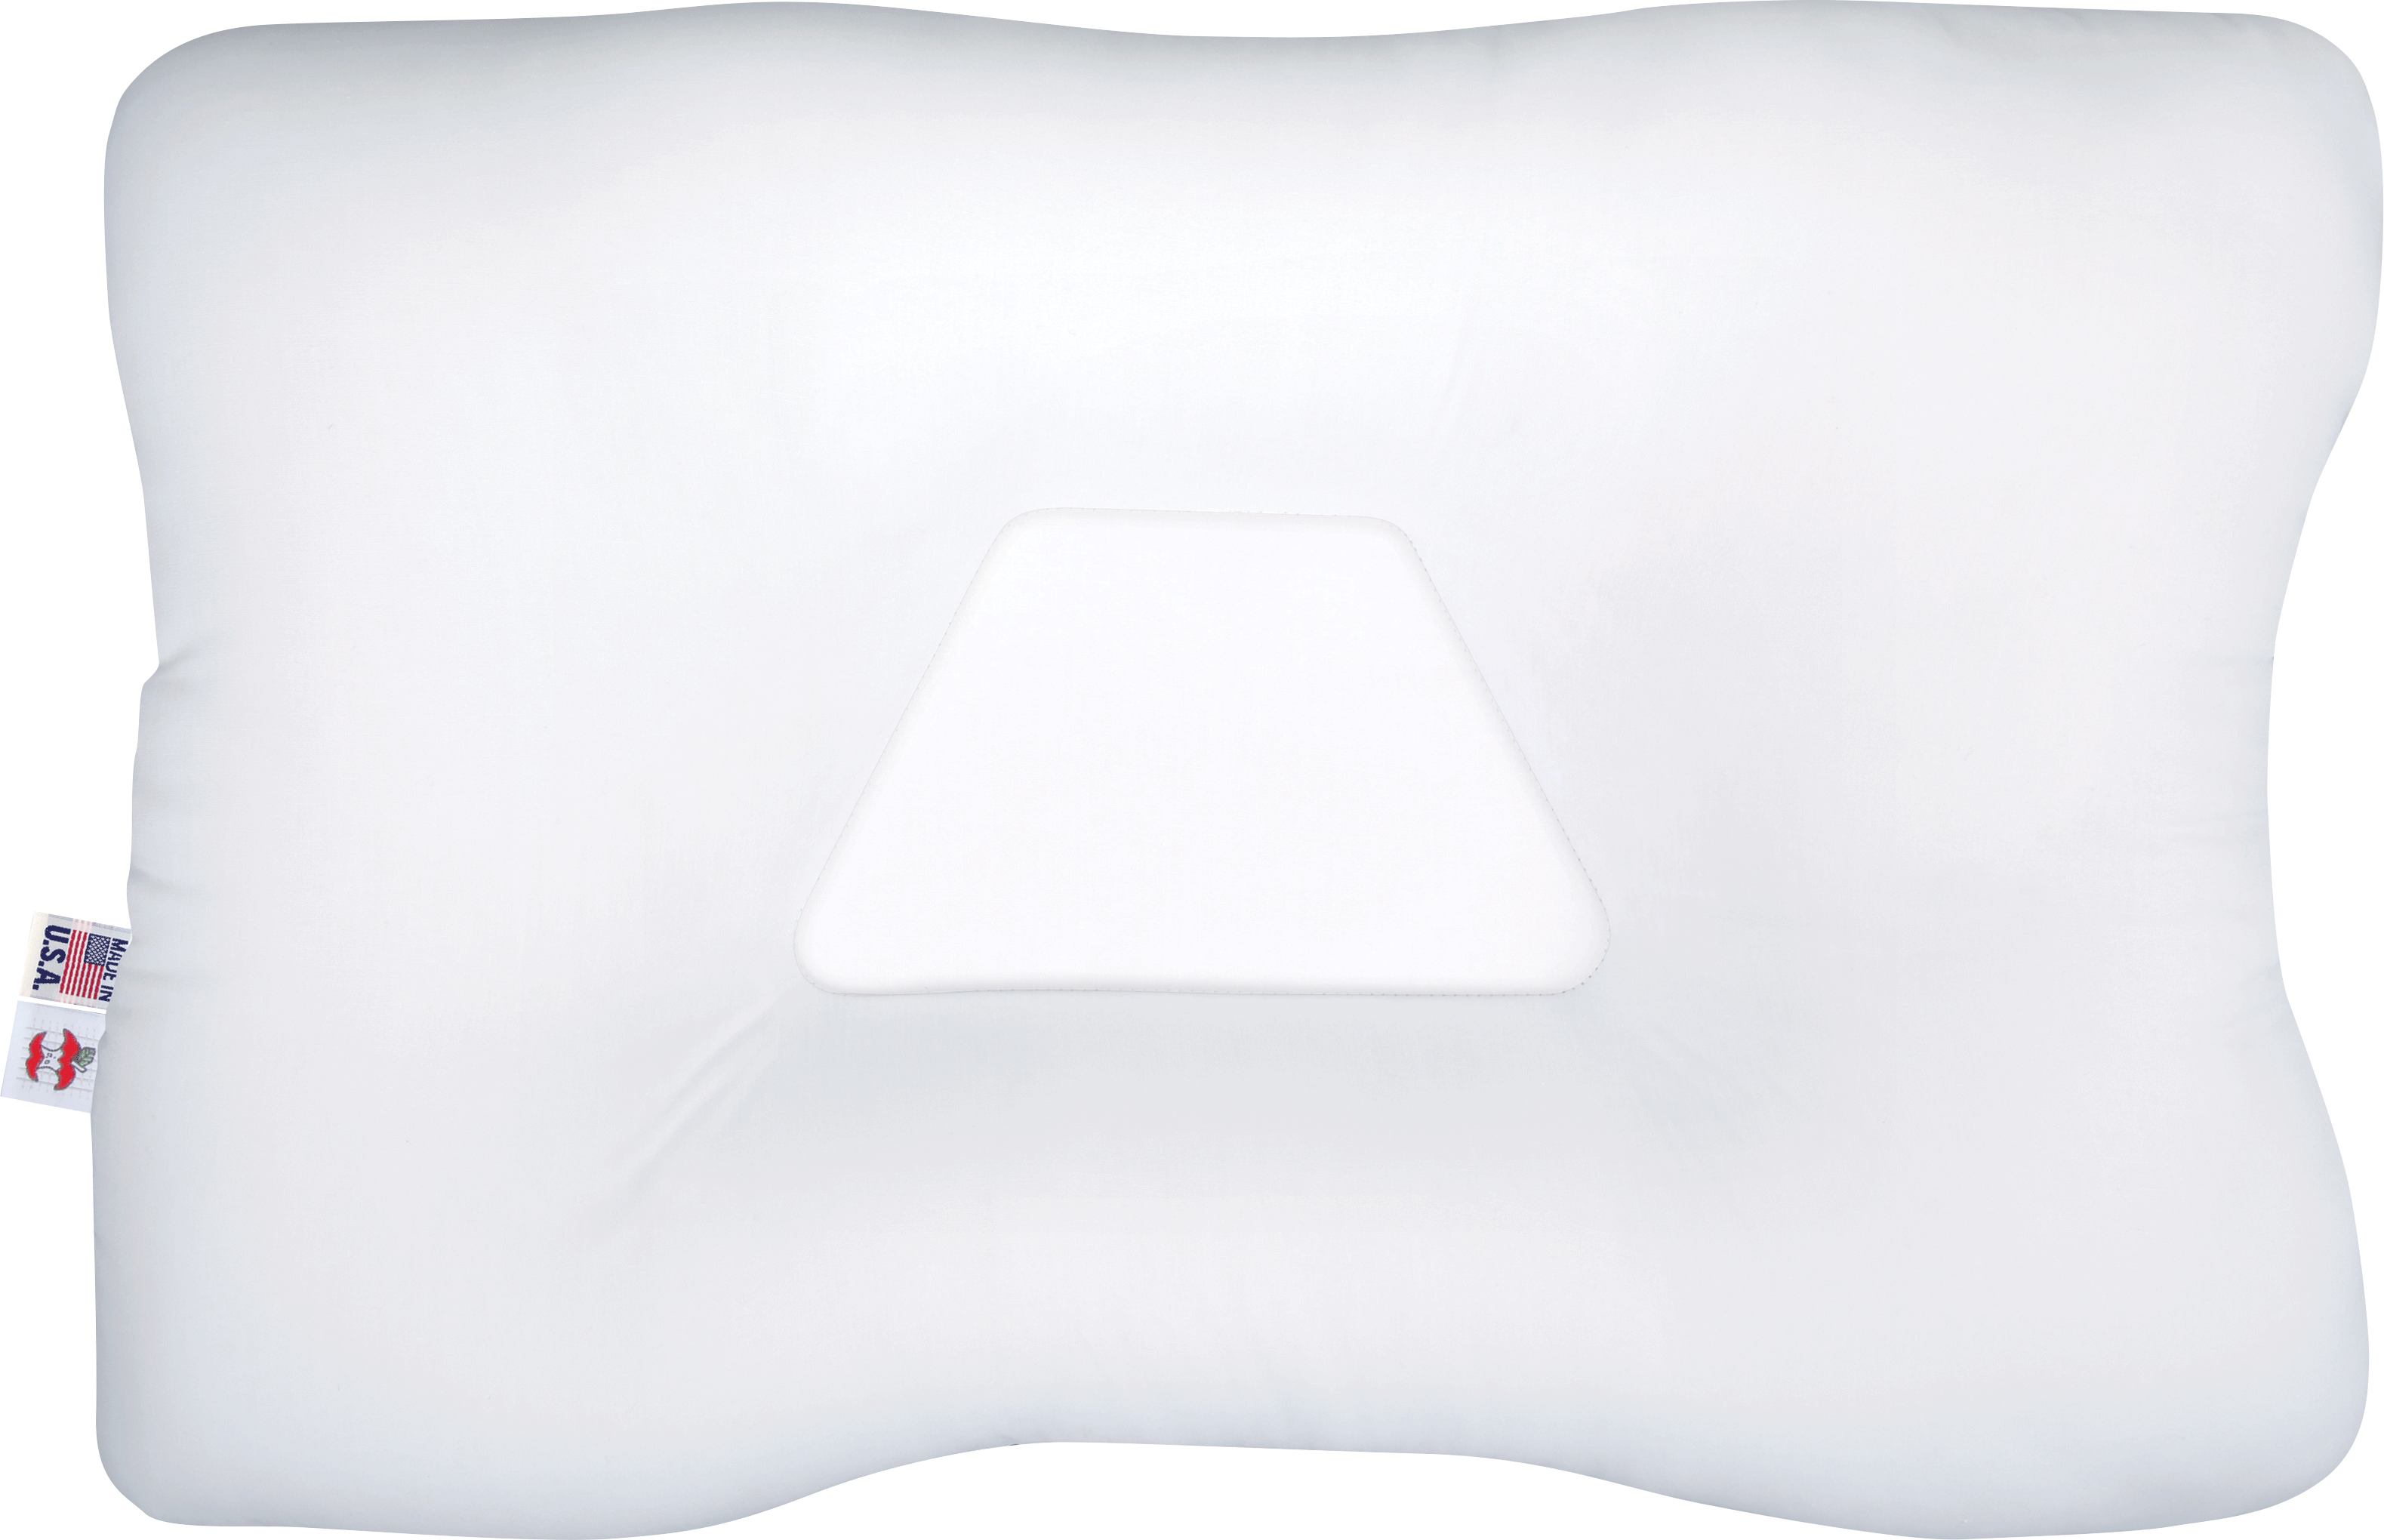 "Standard Tri-Core Pillow (Firm Support) 24"" X 16"""